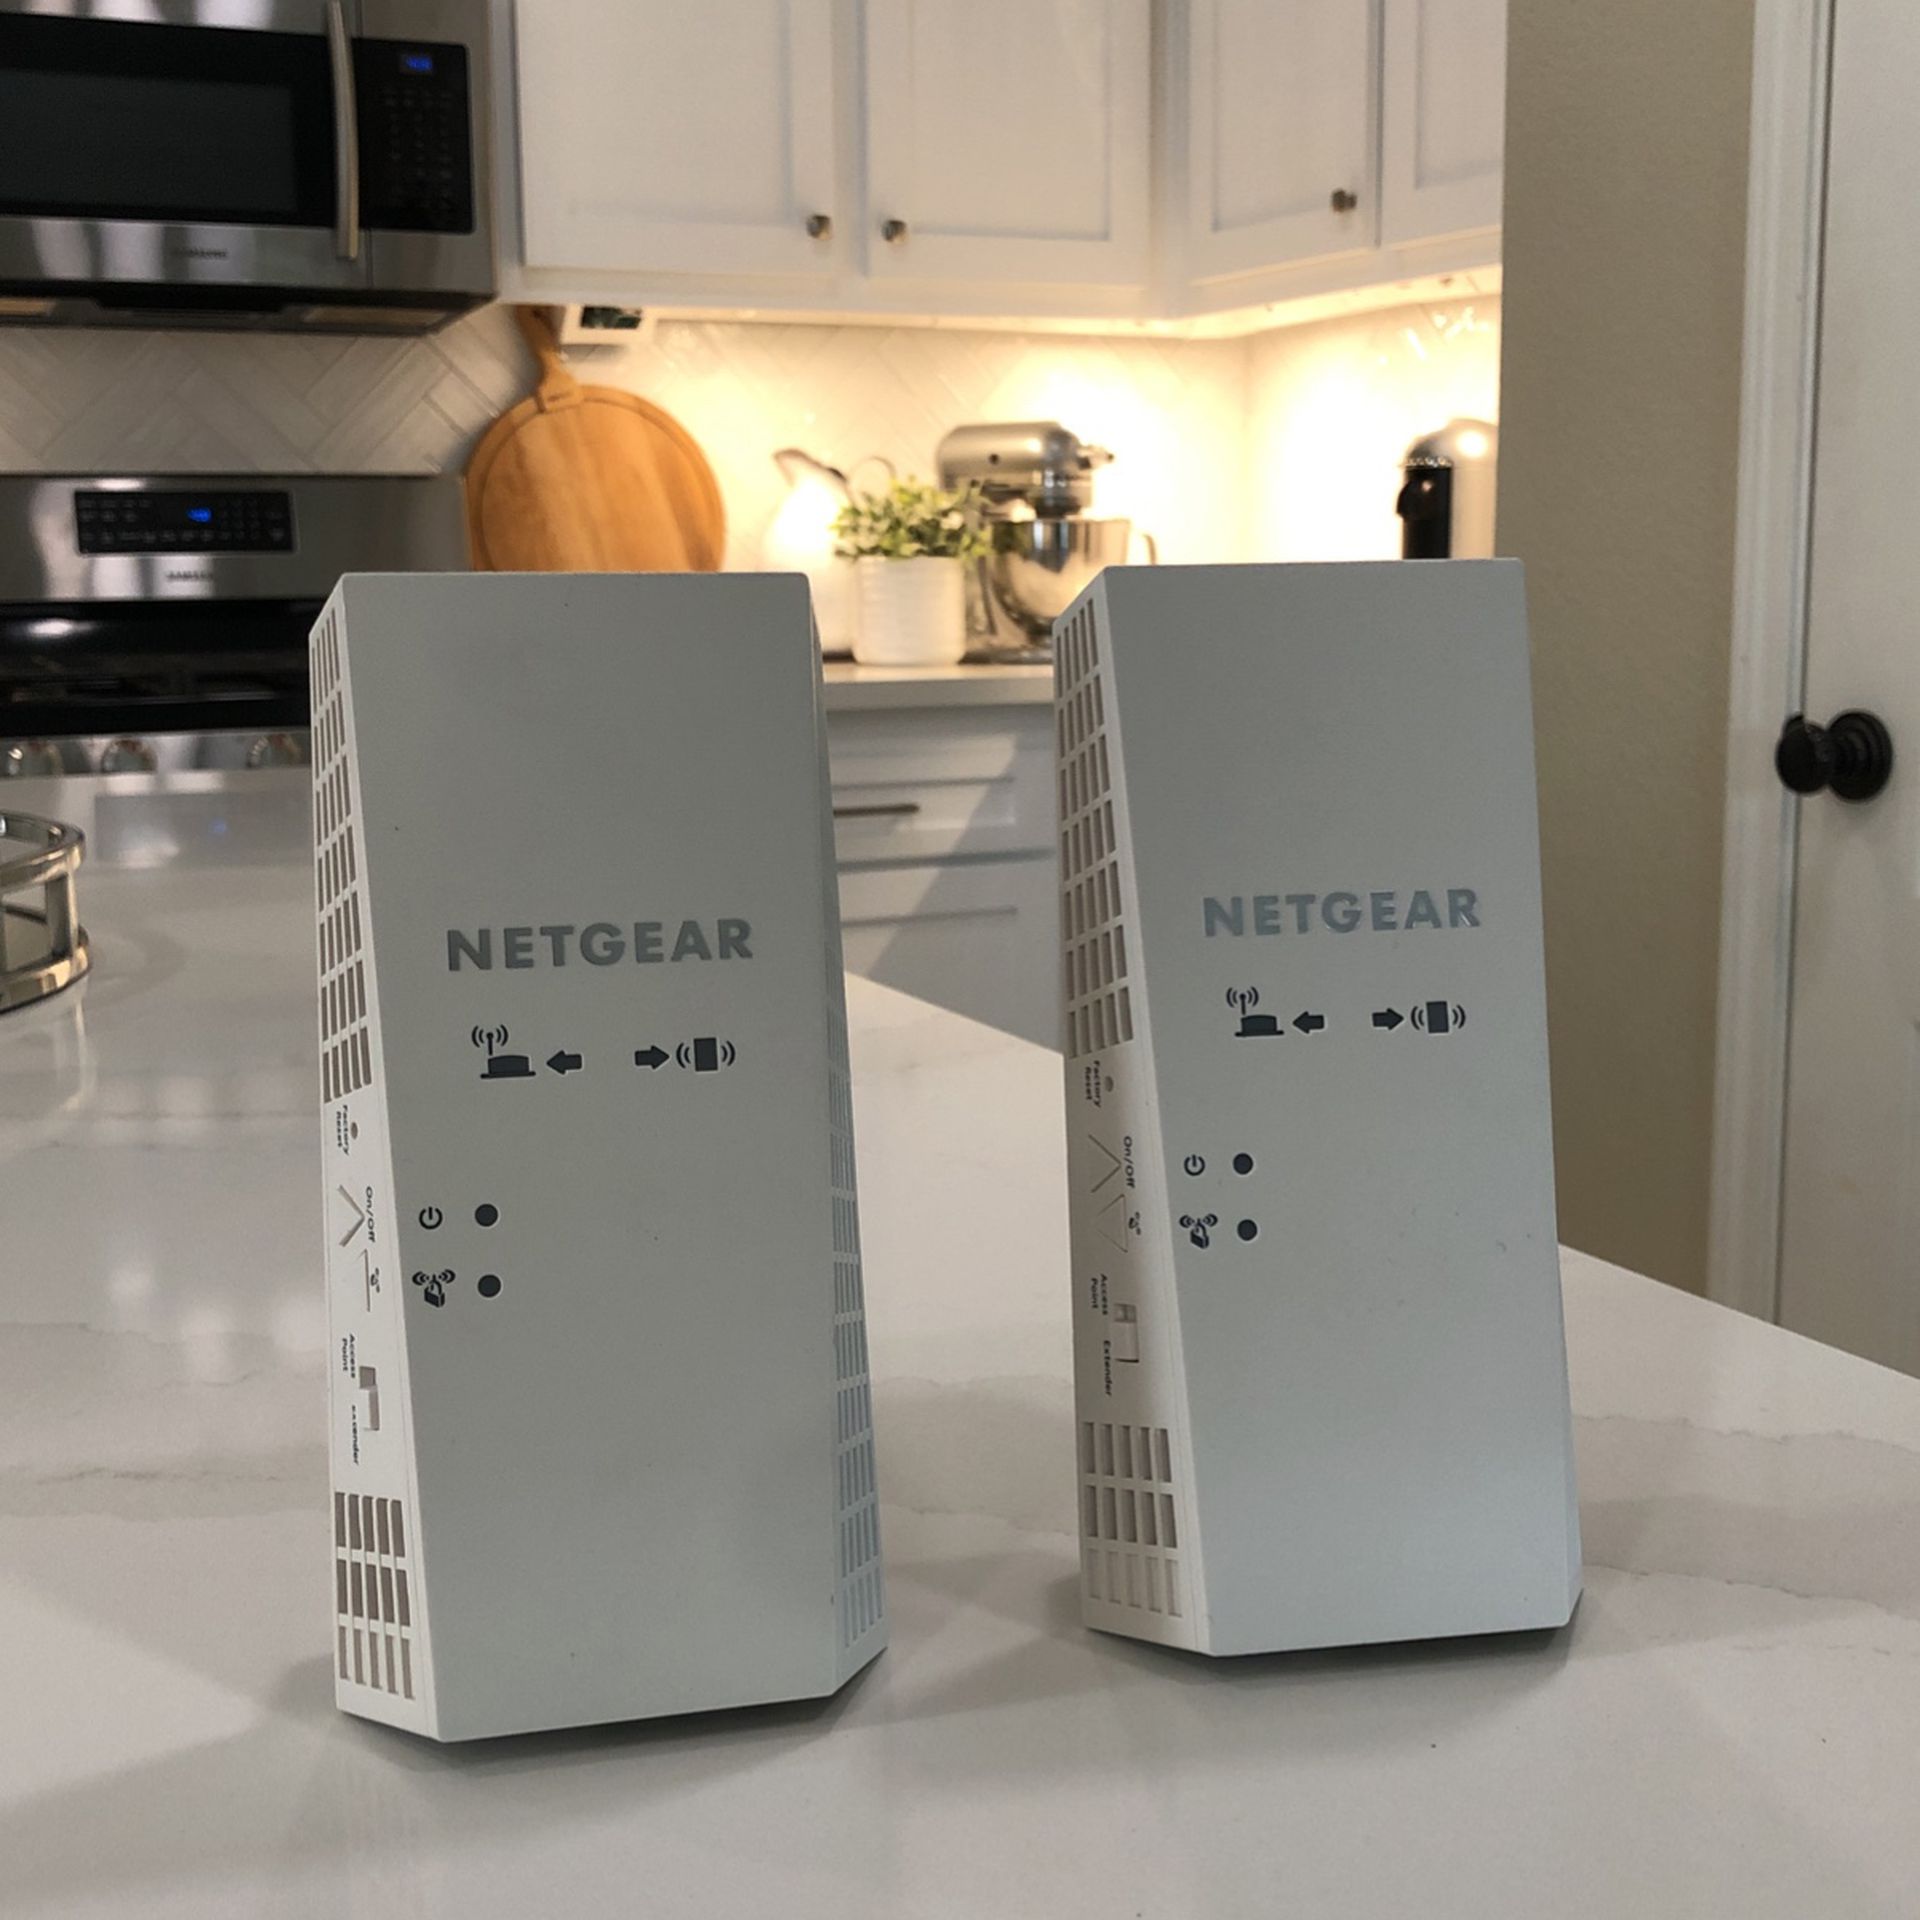 2 x Netgear WiFi Extender - NIGHTHAWK X4